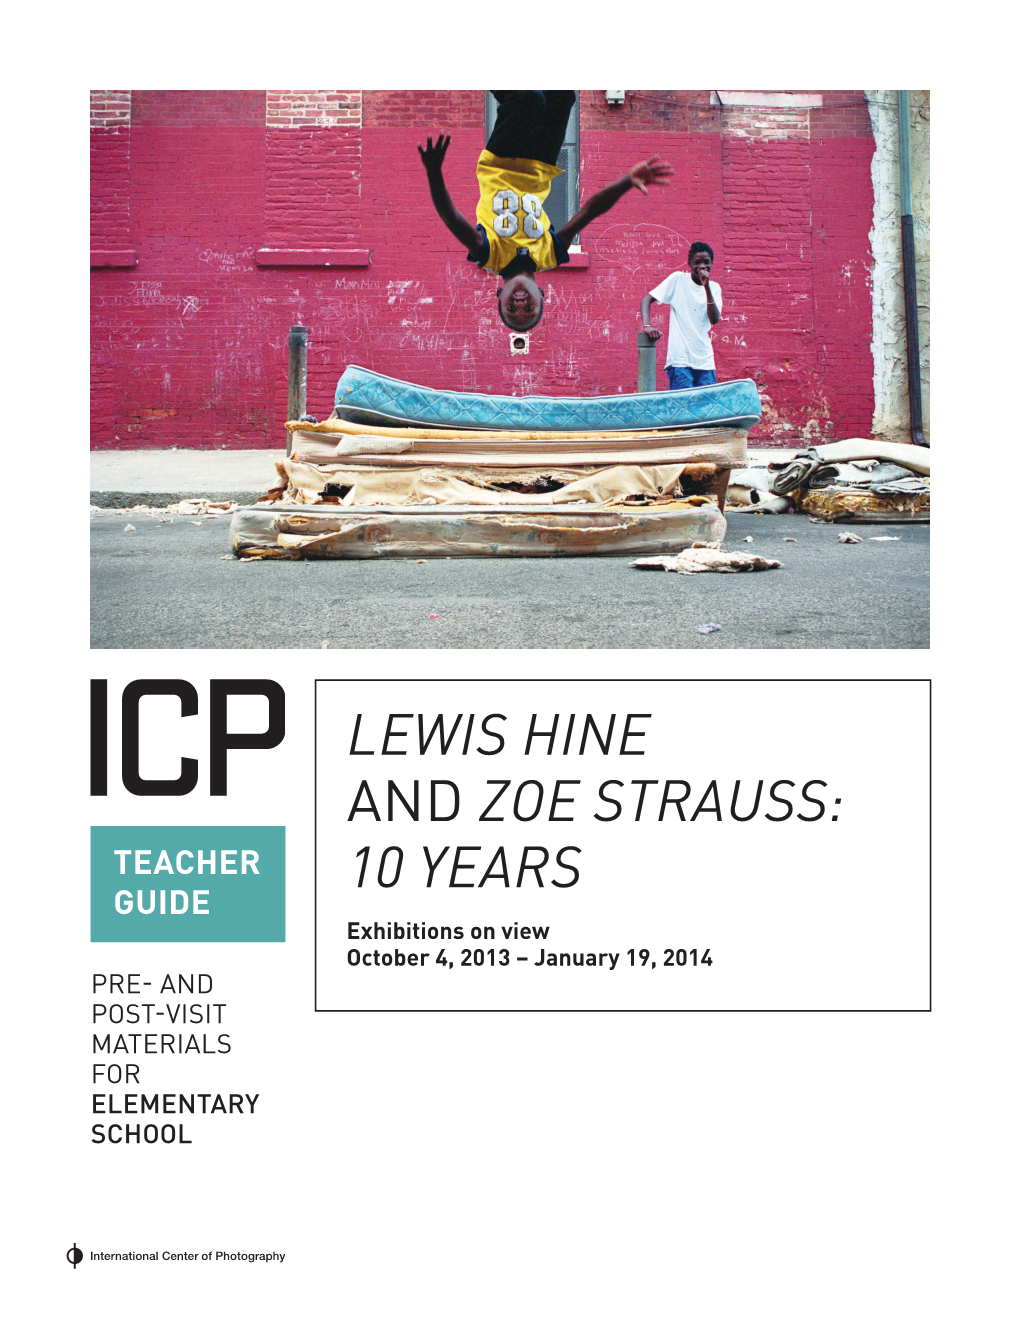 Lewis Hine and Zoe Strauss: 10 Years